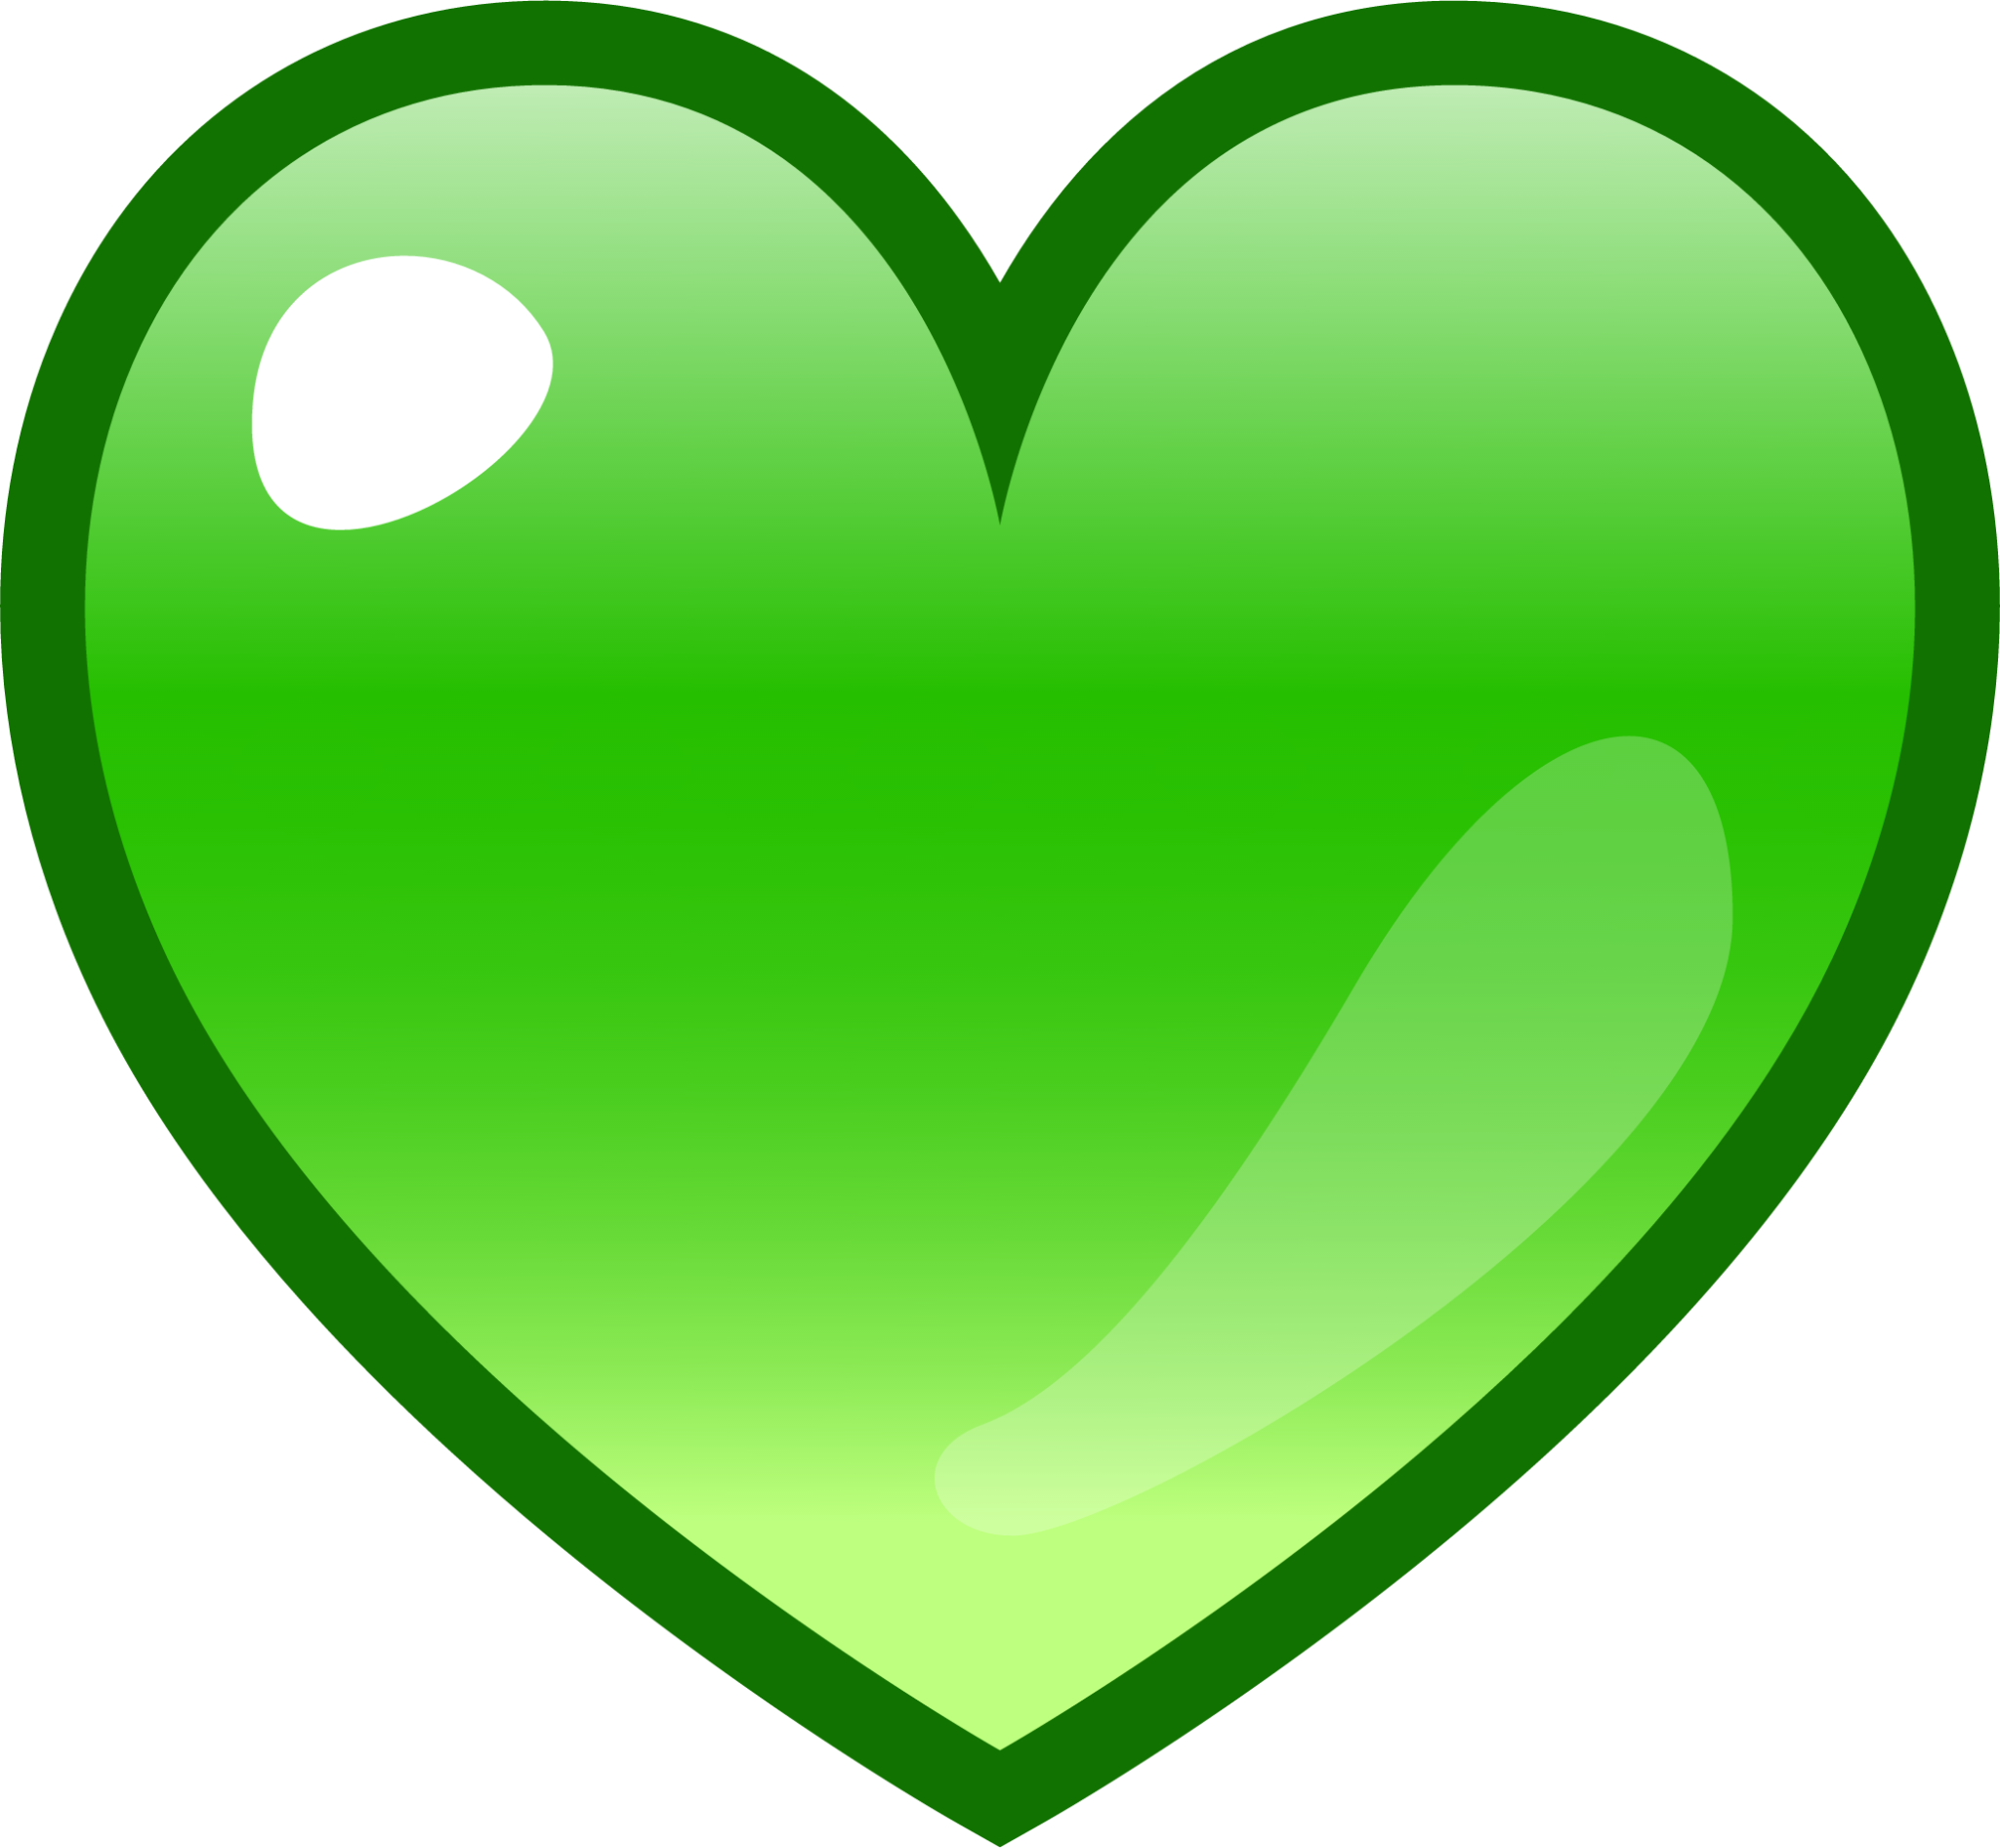 Green Heart PNG HD Image